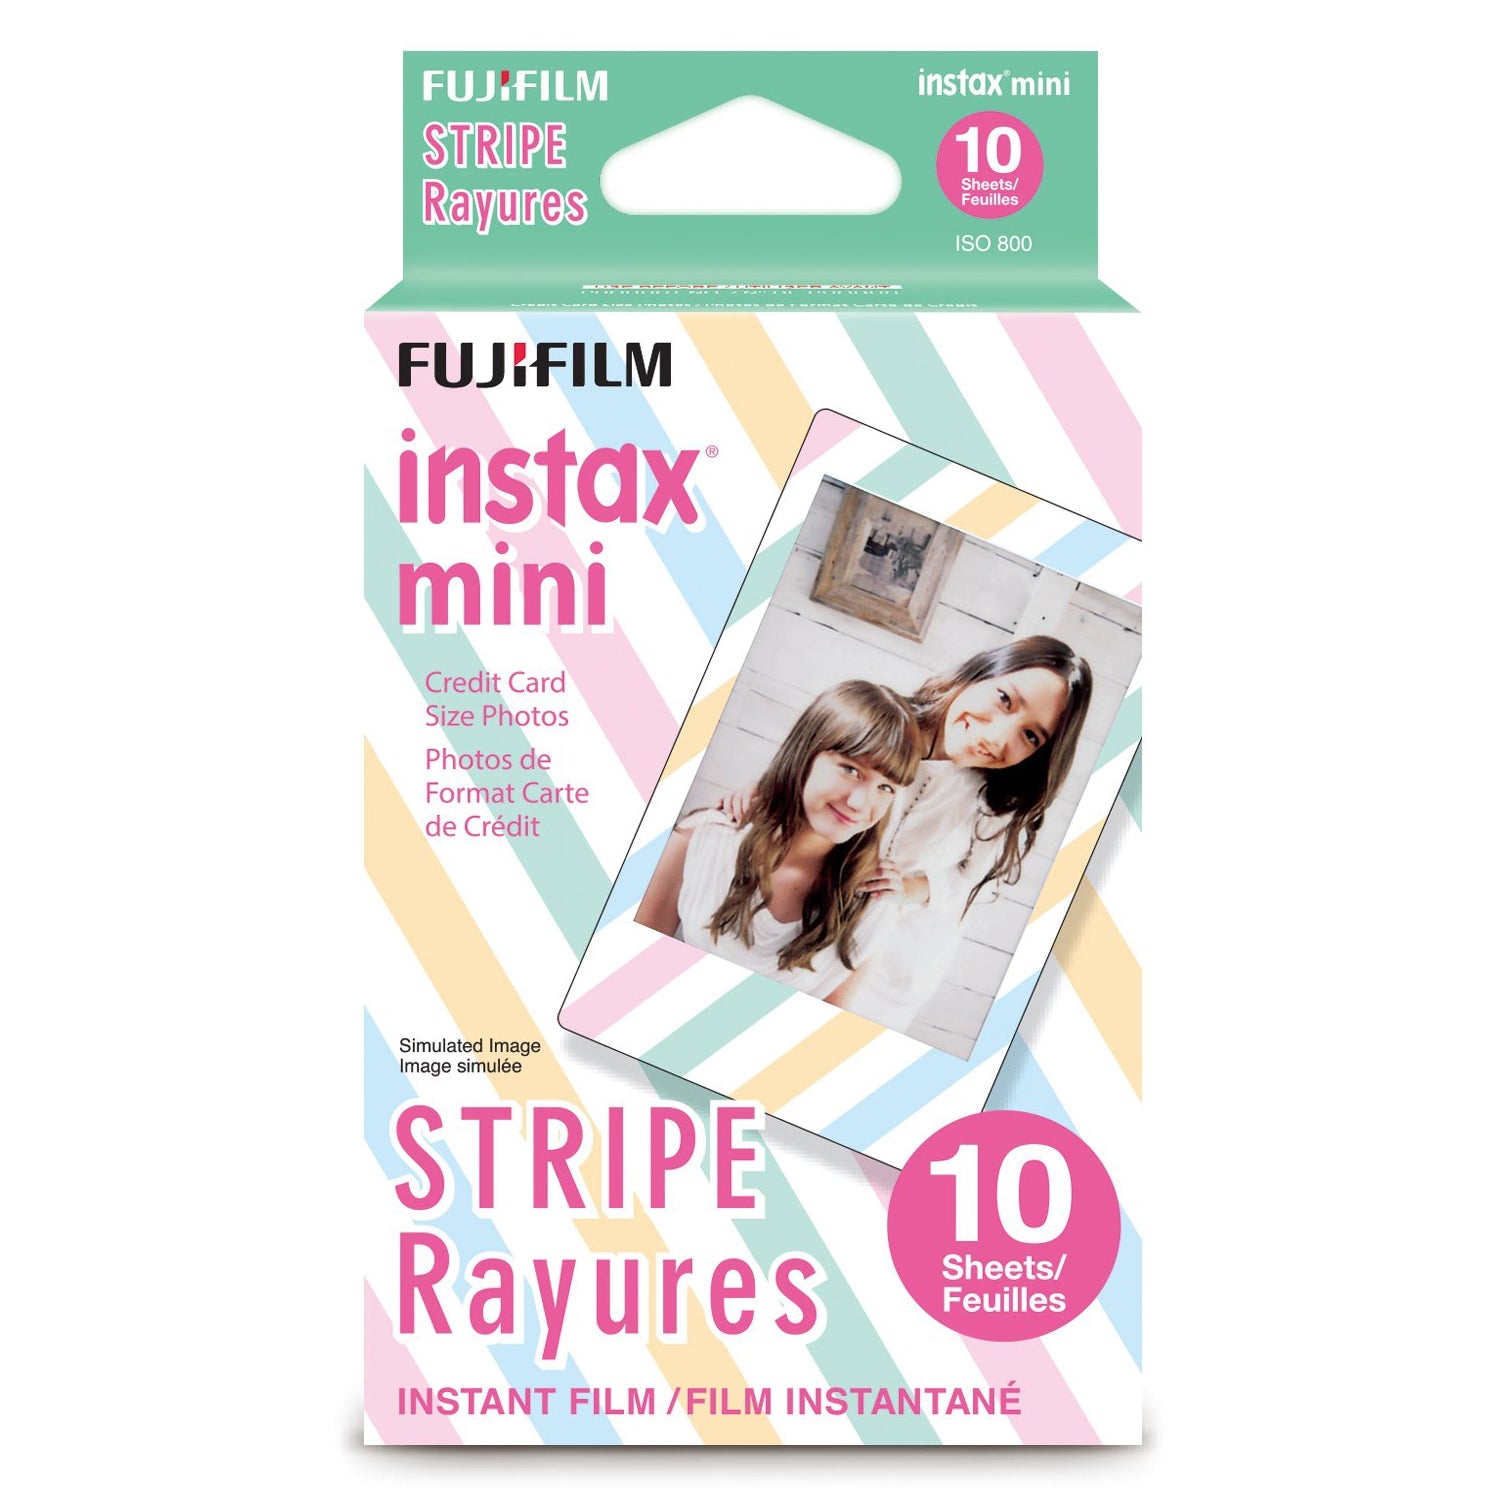 Fujifilm Instax Mini 10X1 stripe  Instant Film with 96-sheet Album for mini film (lce white)